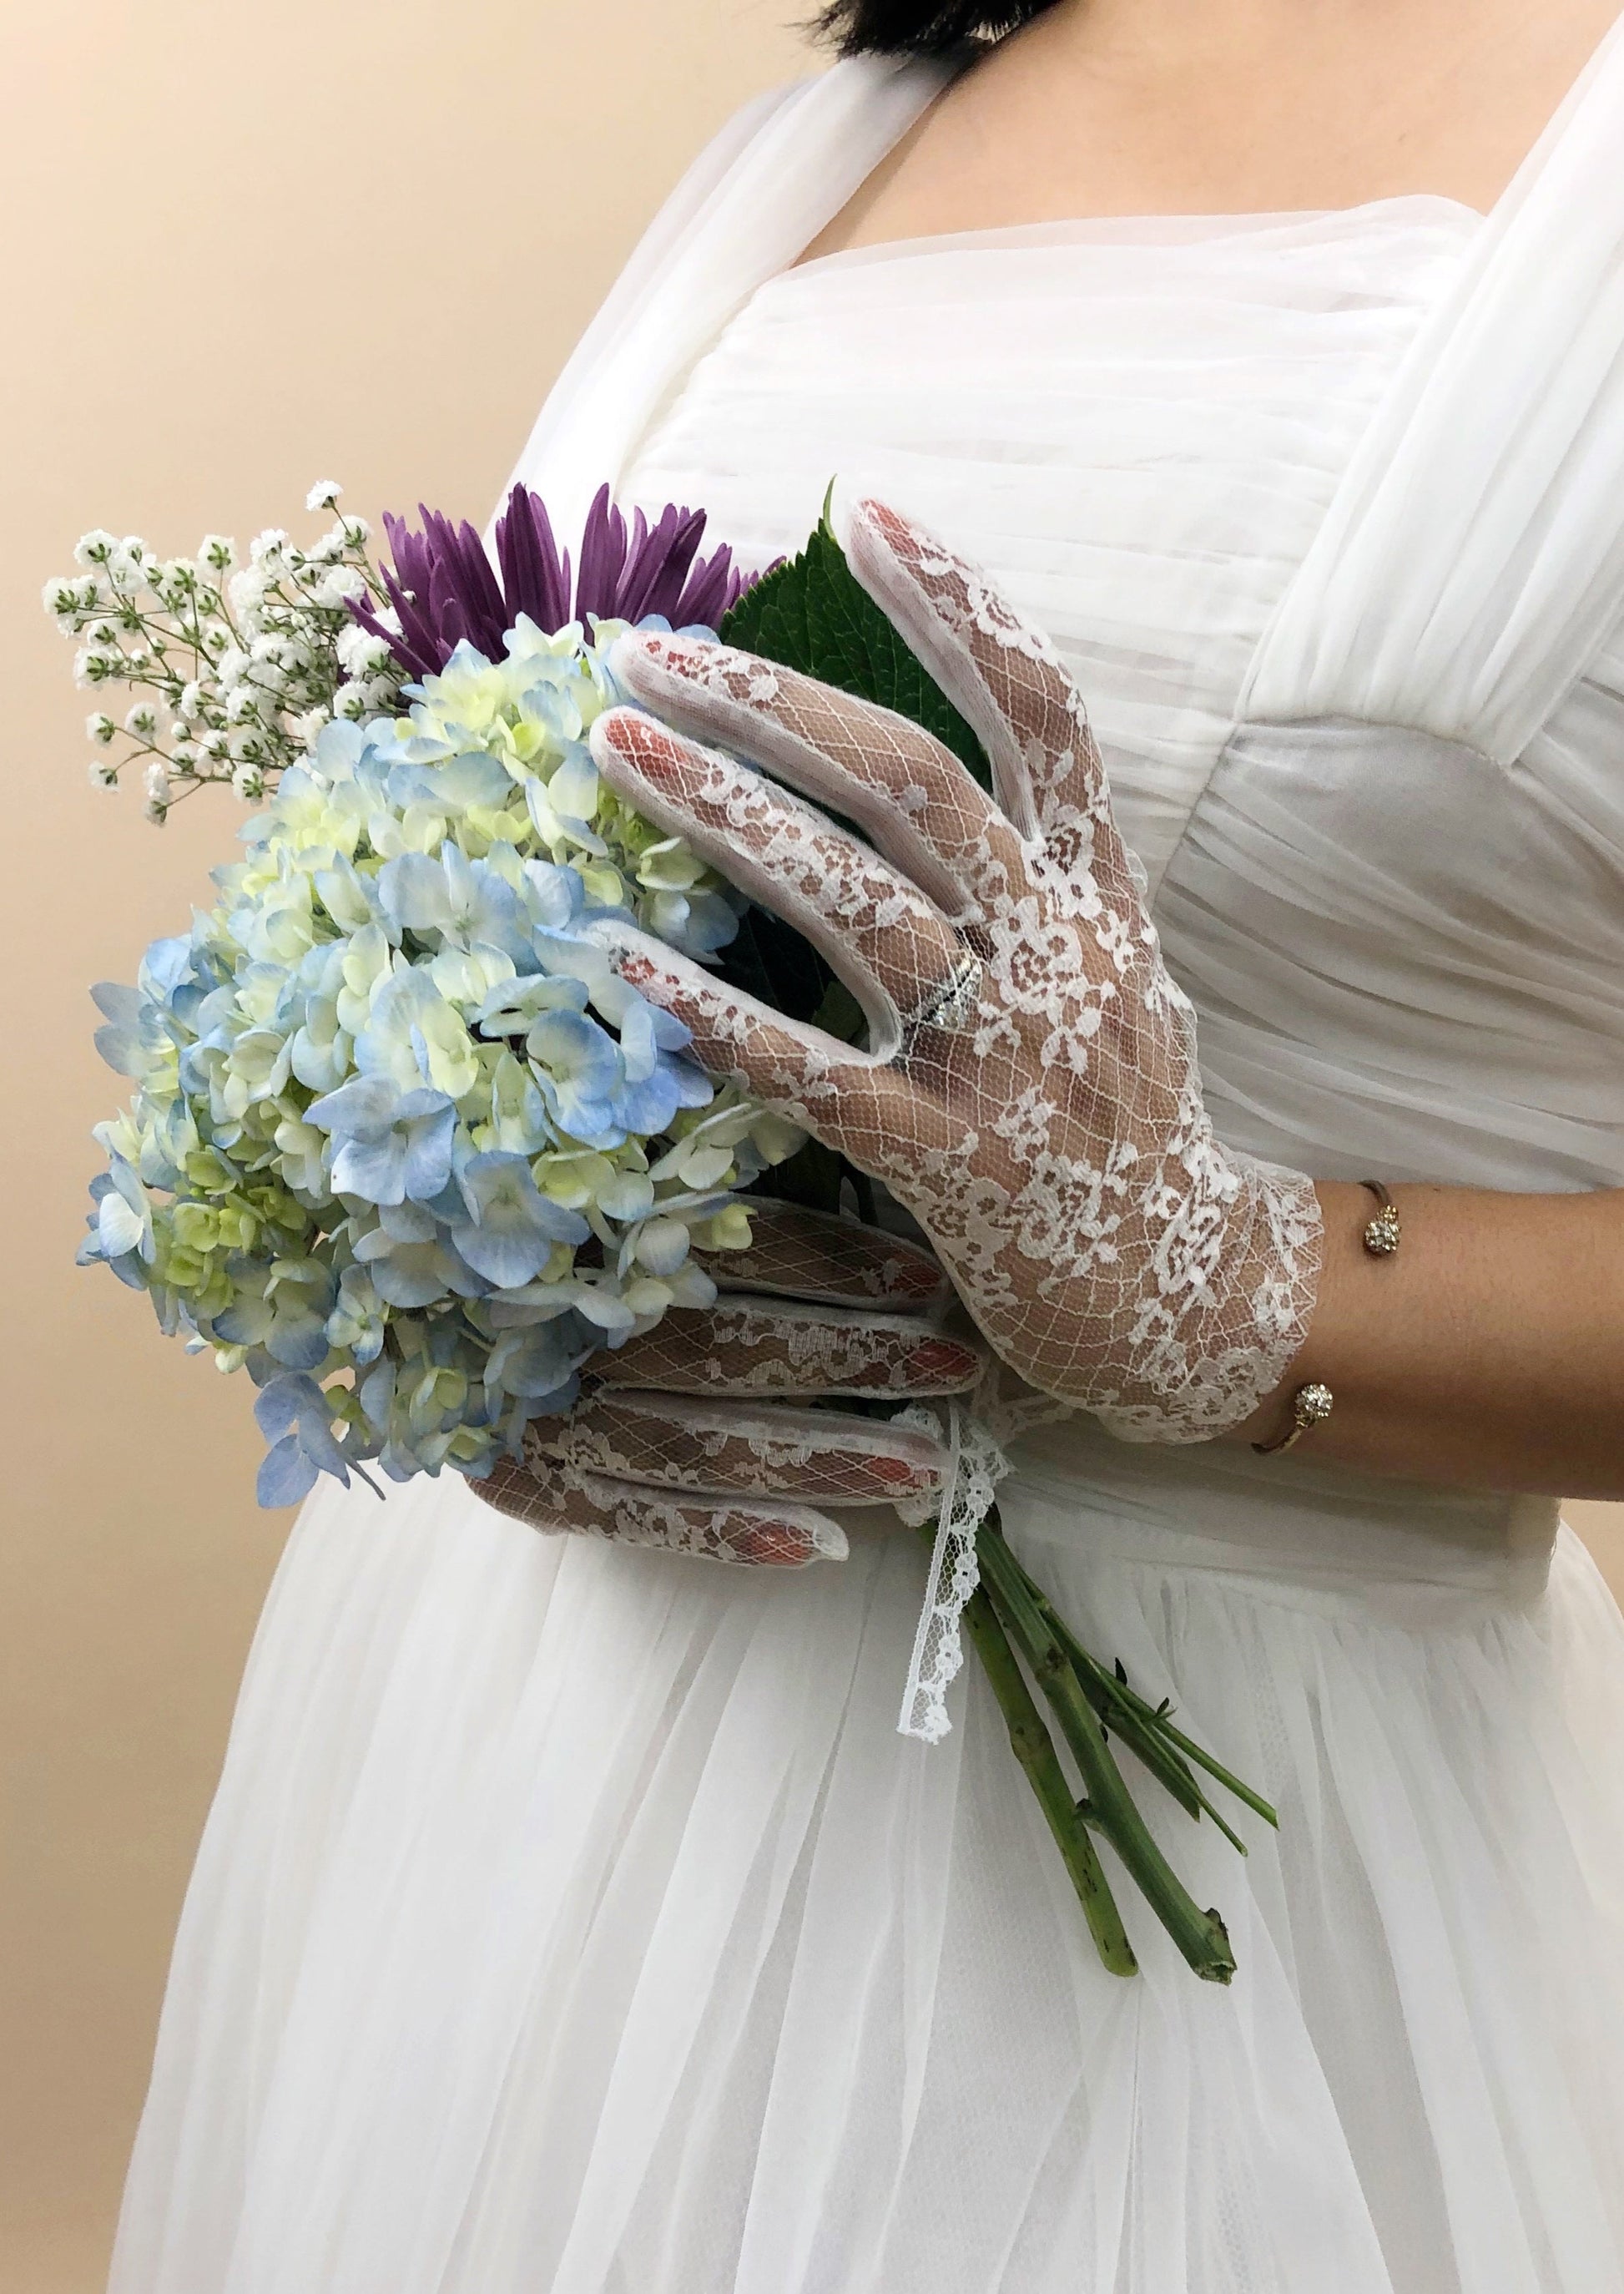 hands wearing gloves holding flower bouquet